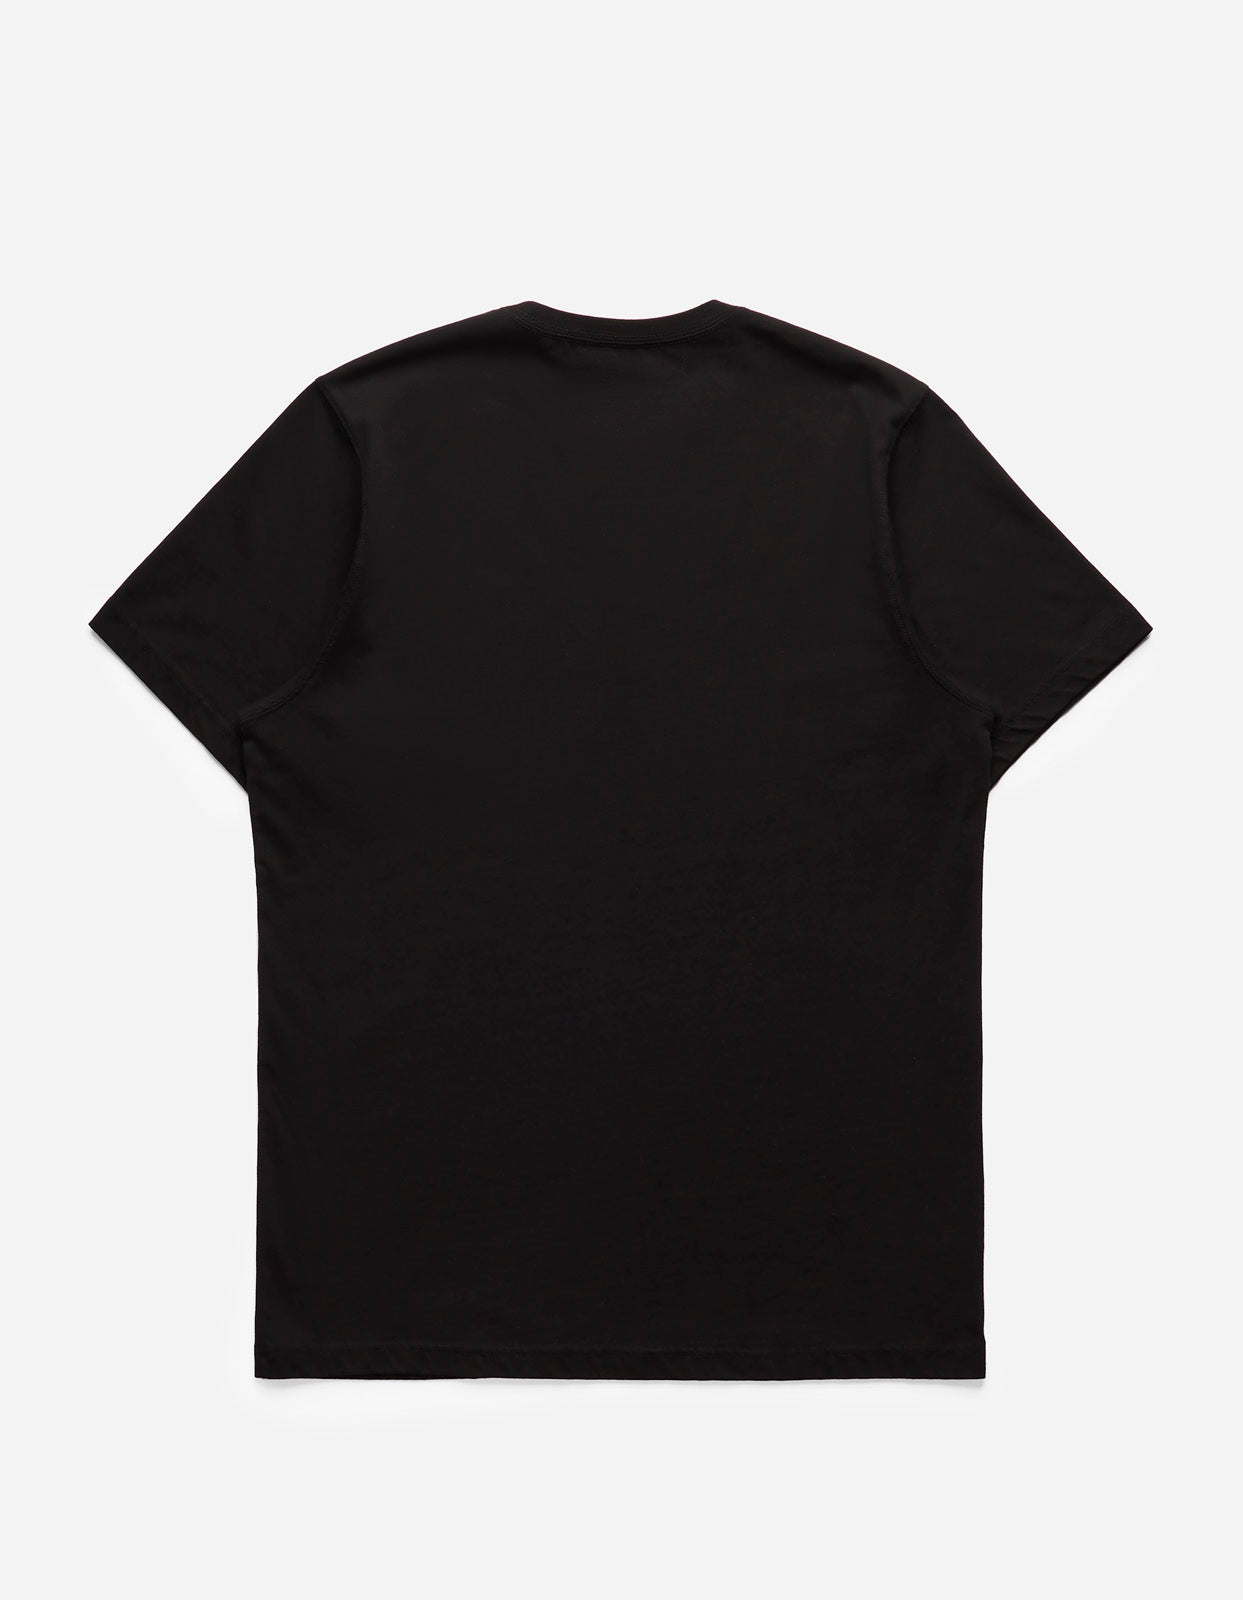 1296 Tiger Fur Calligraphy T-Shirt Black